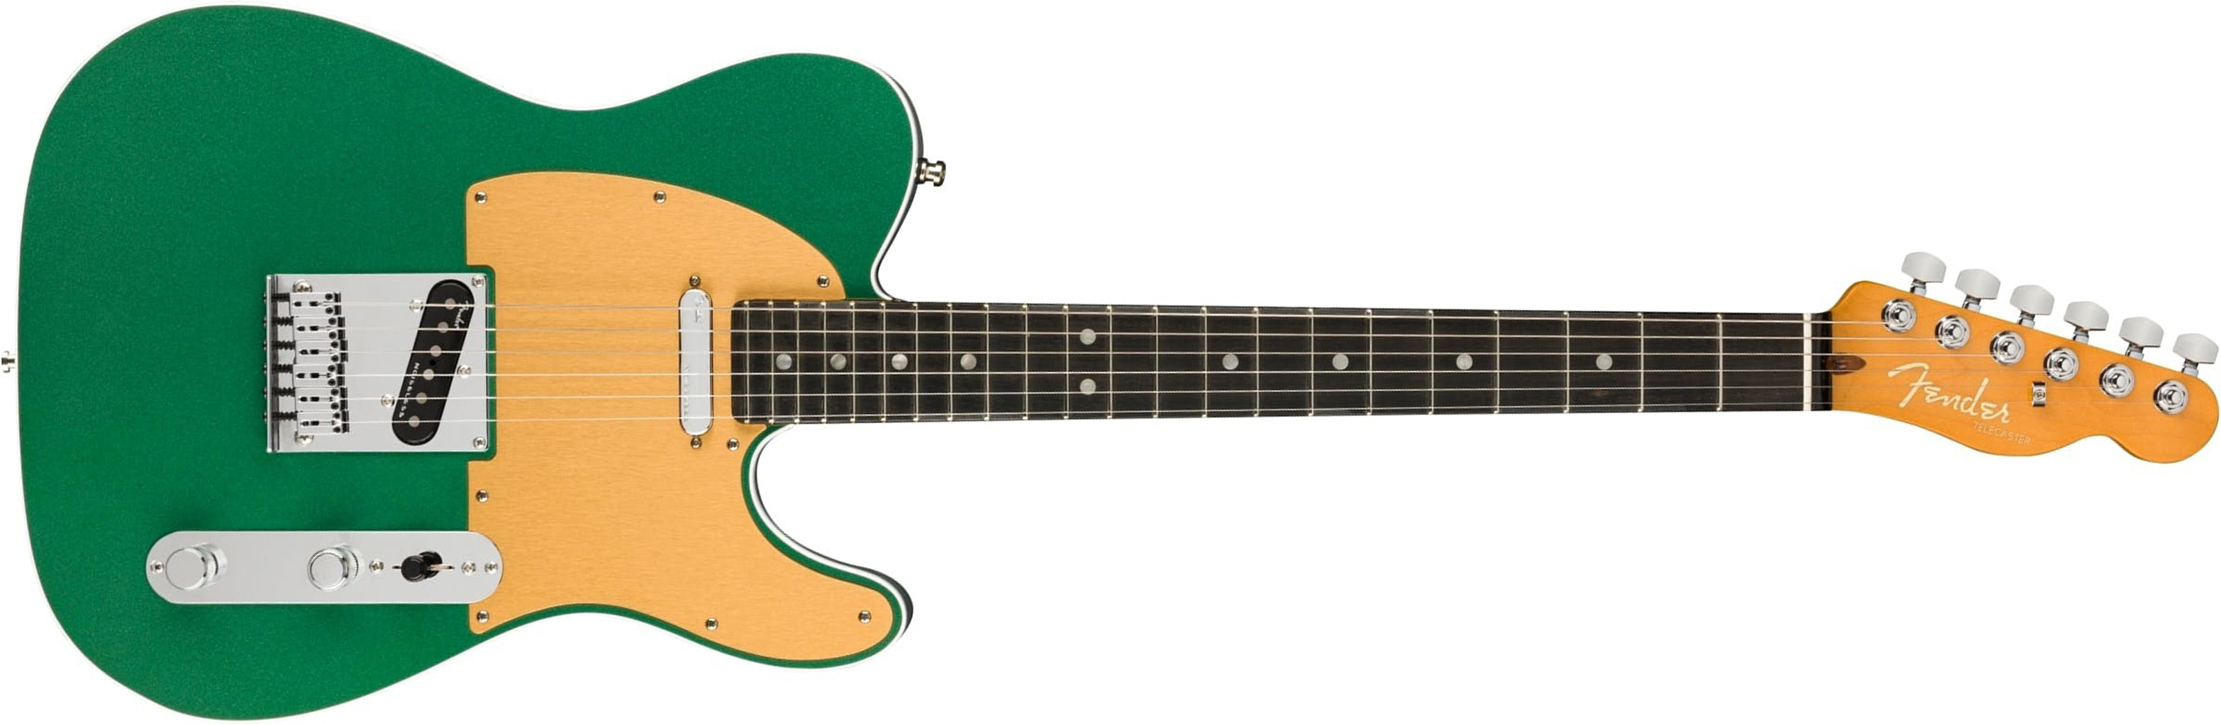 Fender Tele American Ultra Fsr Ltd Usa 2s Ht Eb - Mystic Pine Green - E-Gitarre in Teleform - Main picture